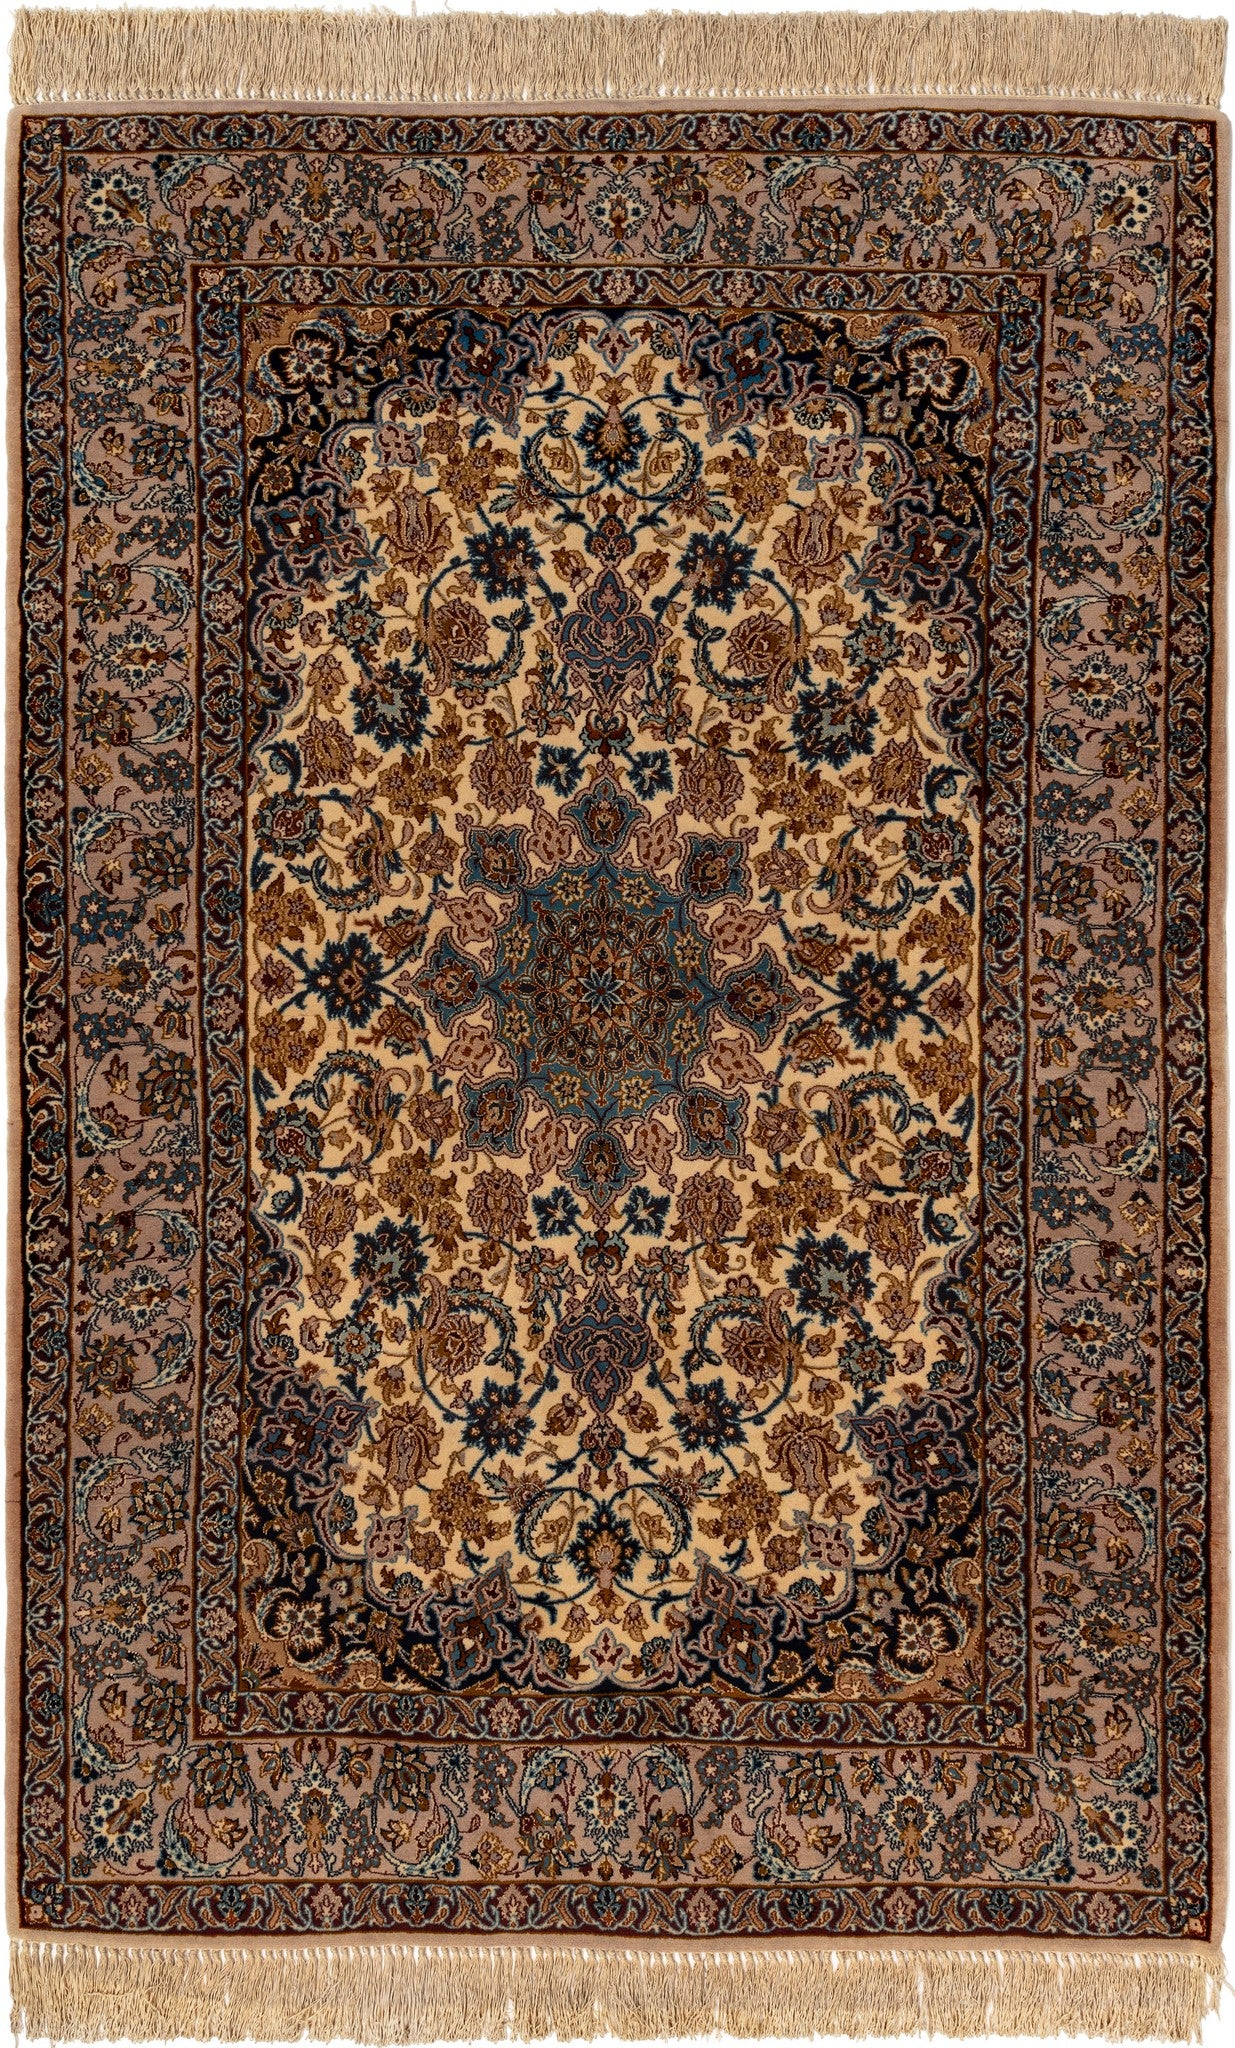 169x109 Isfahan with Silk